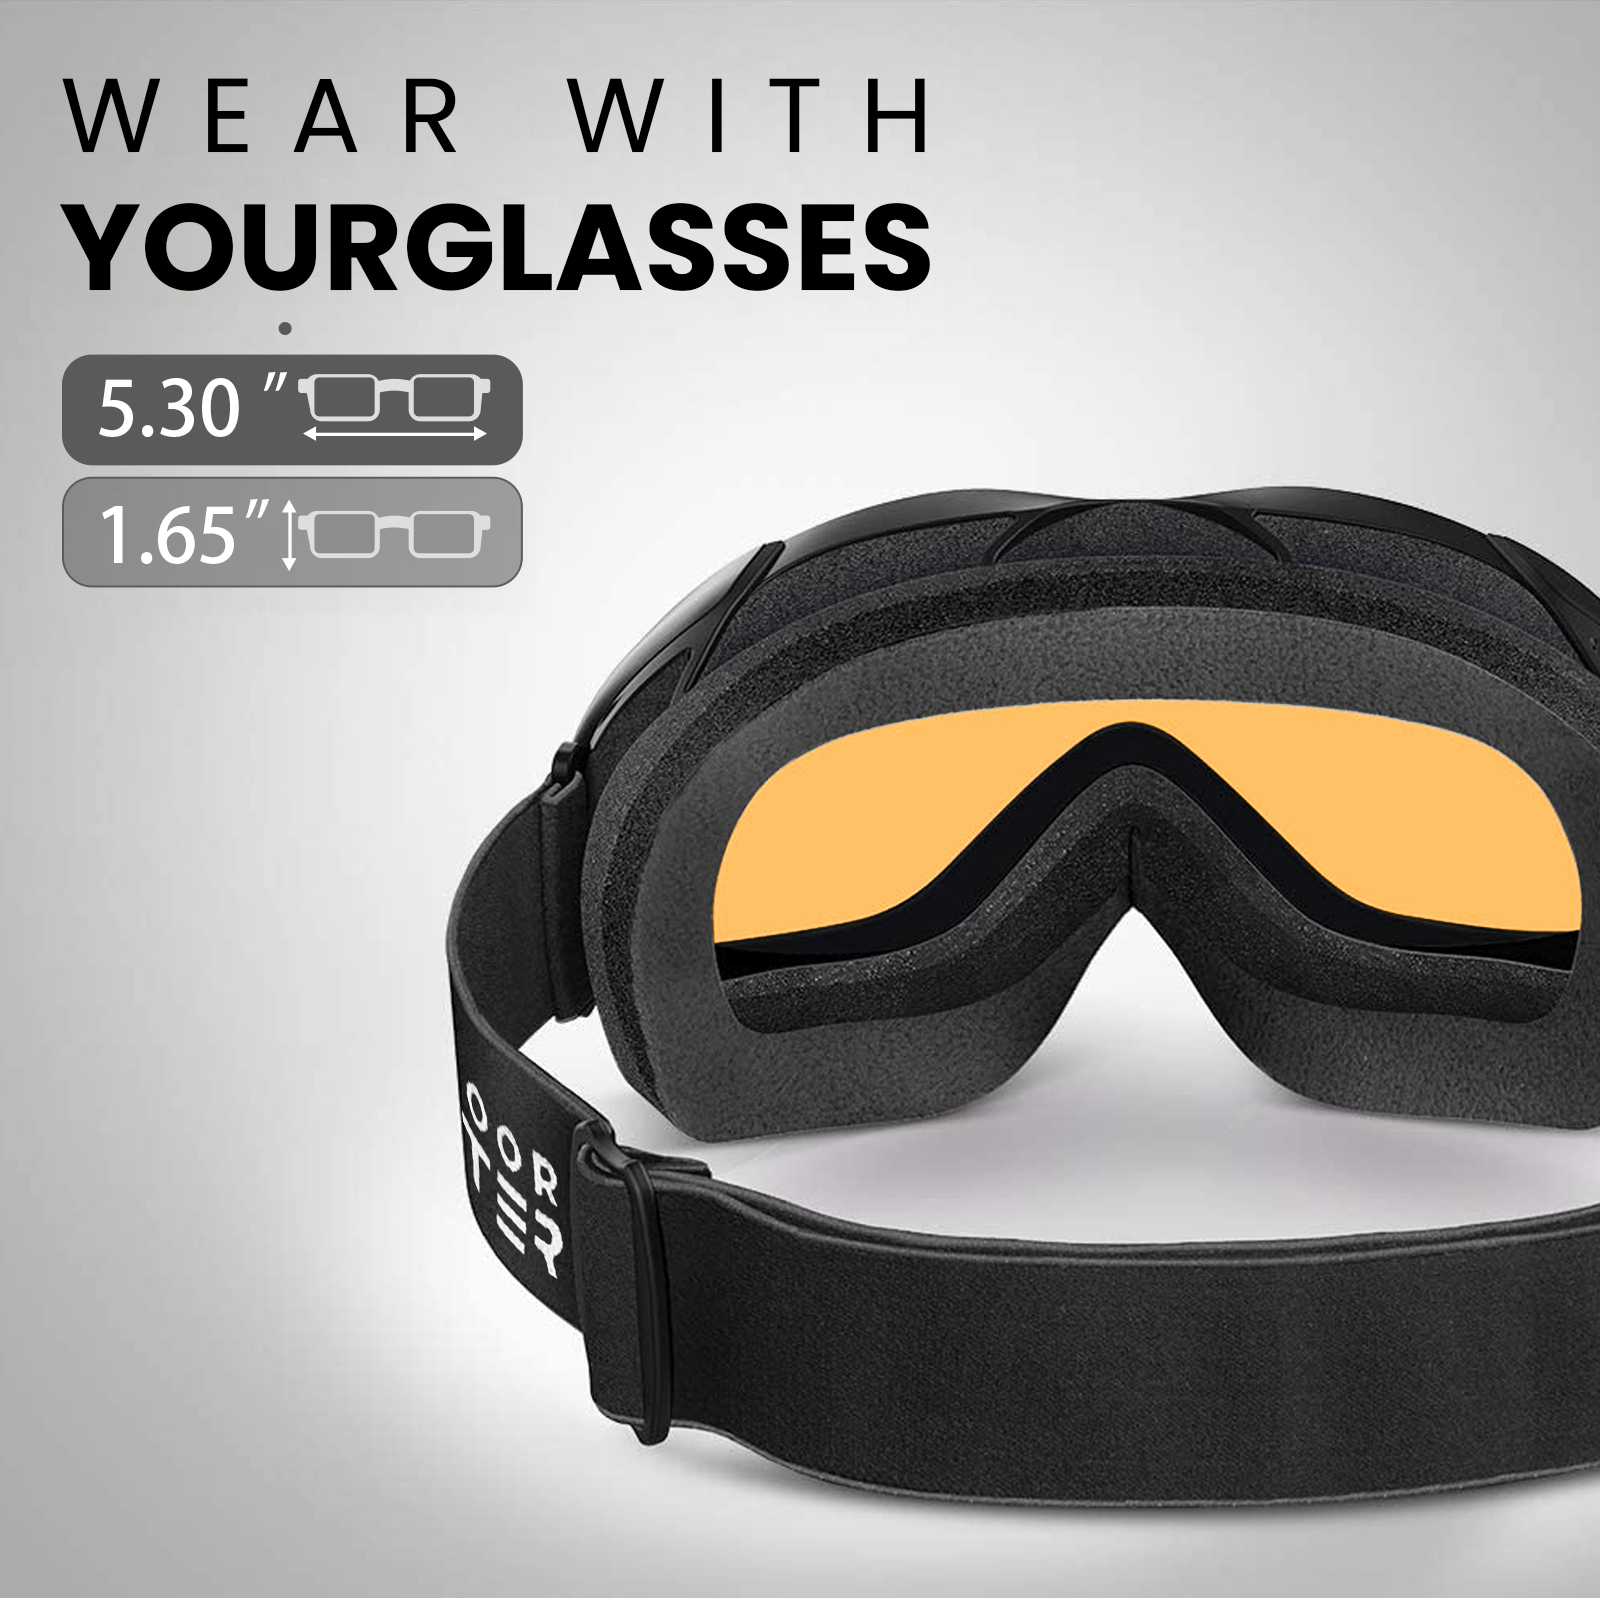 ski goggles that fit over glasses